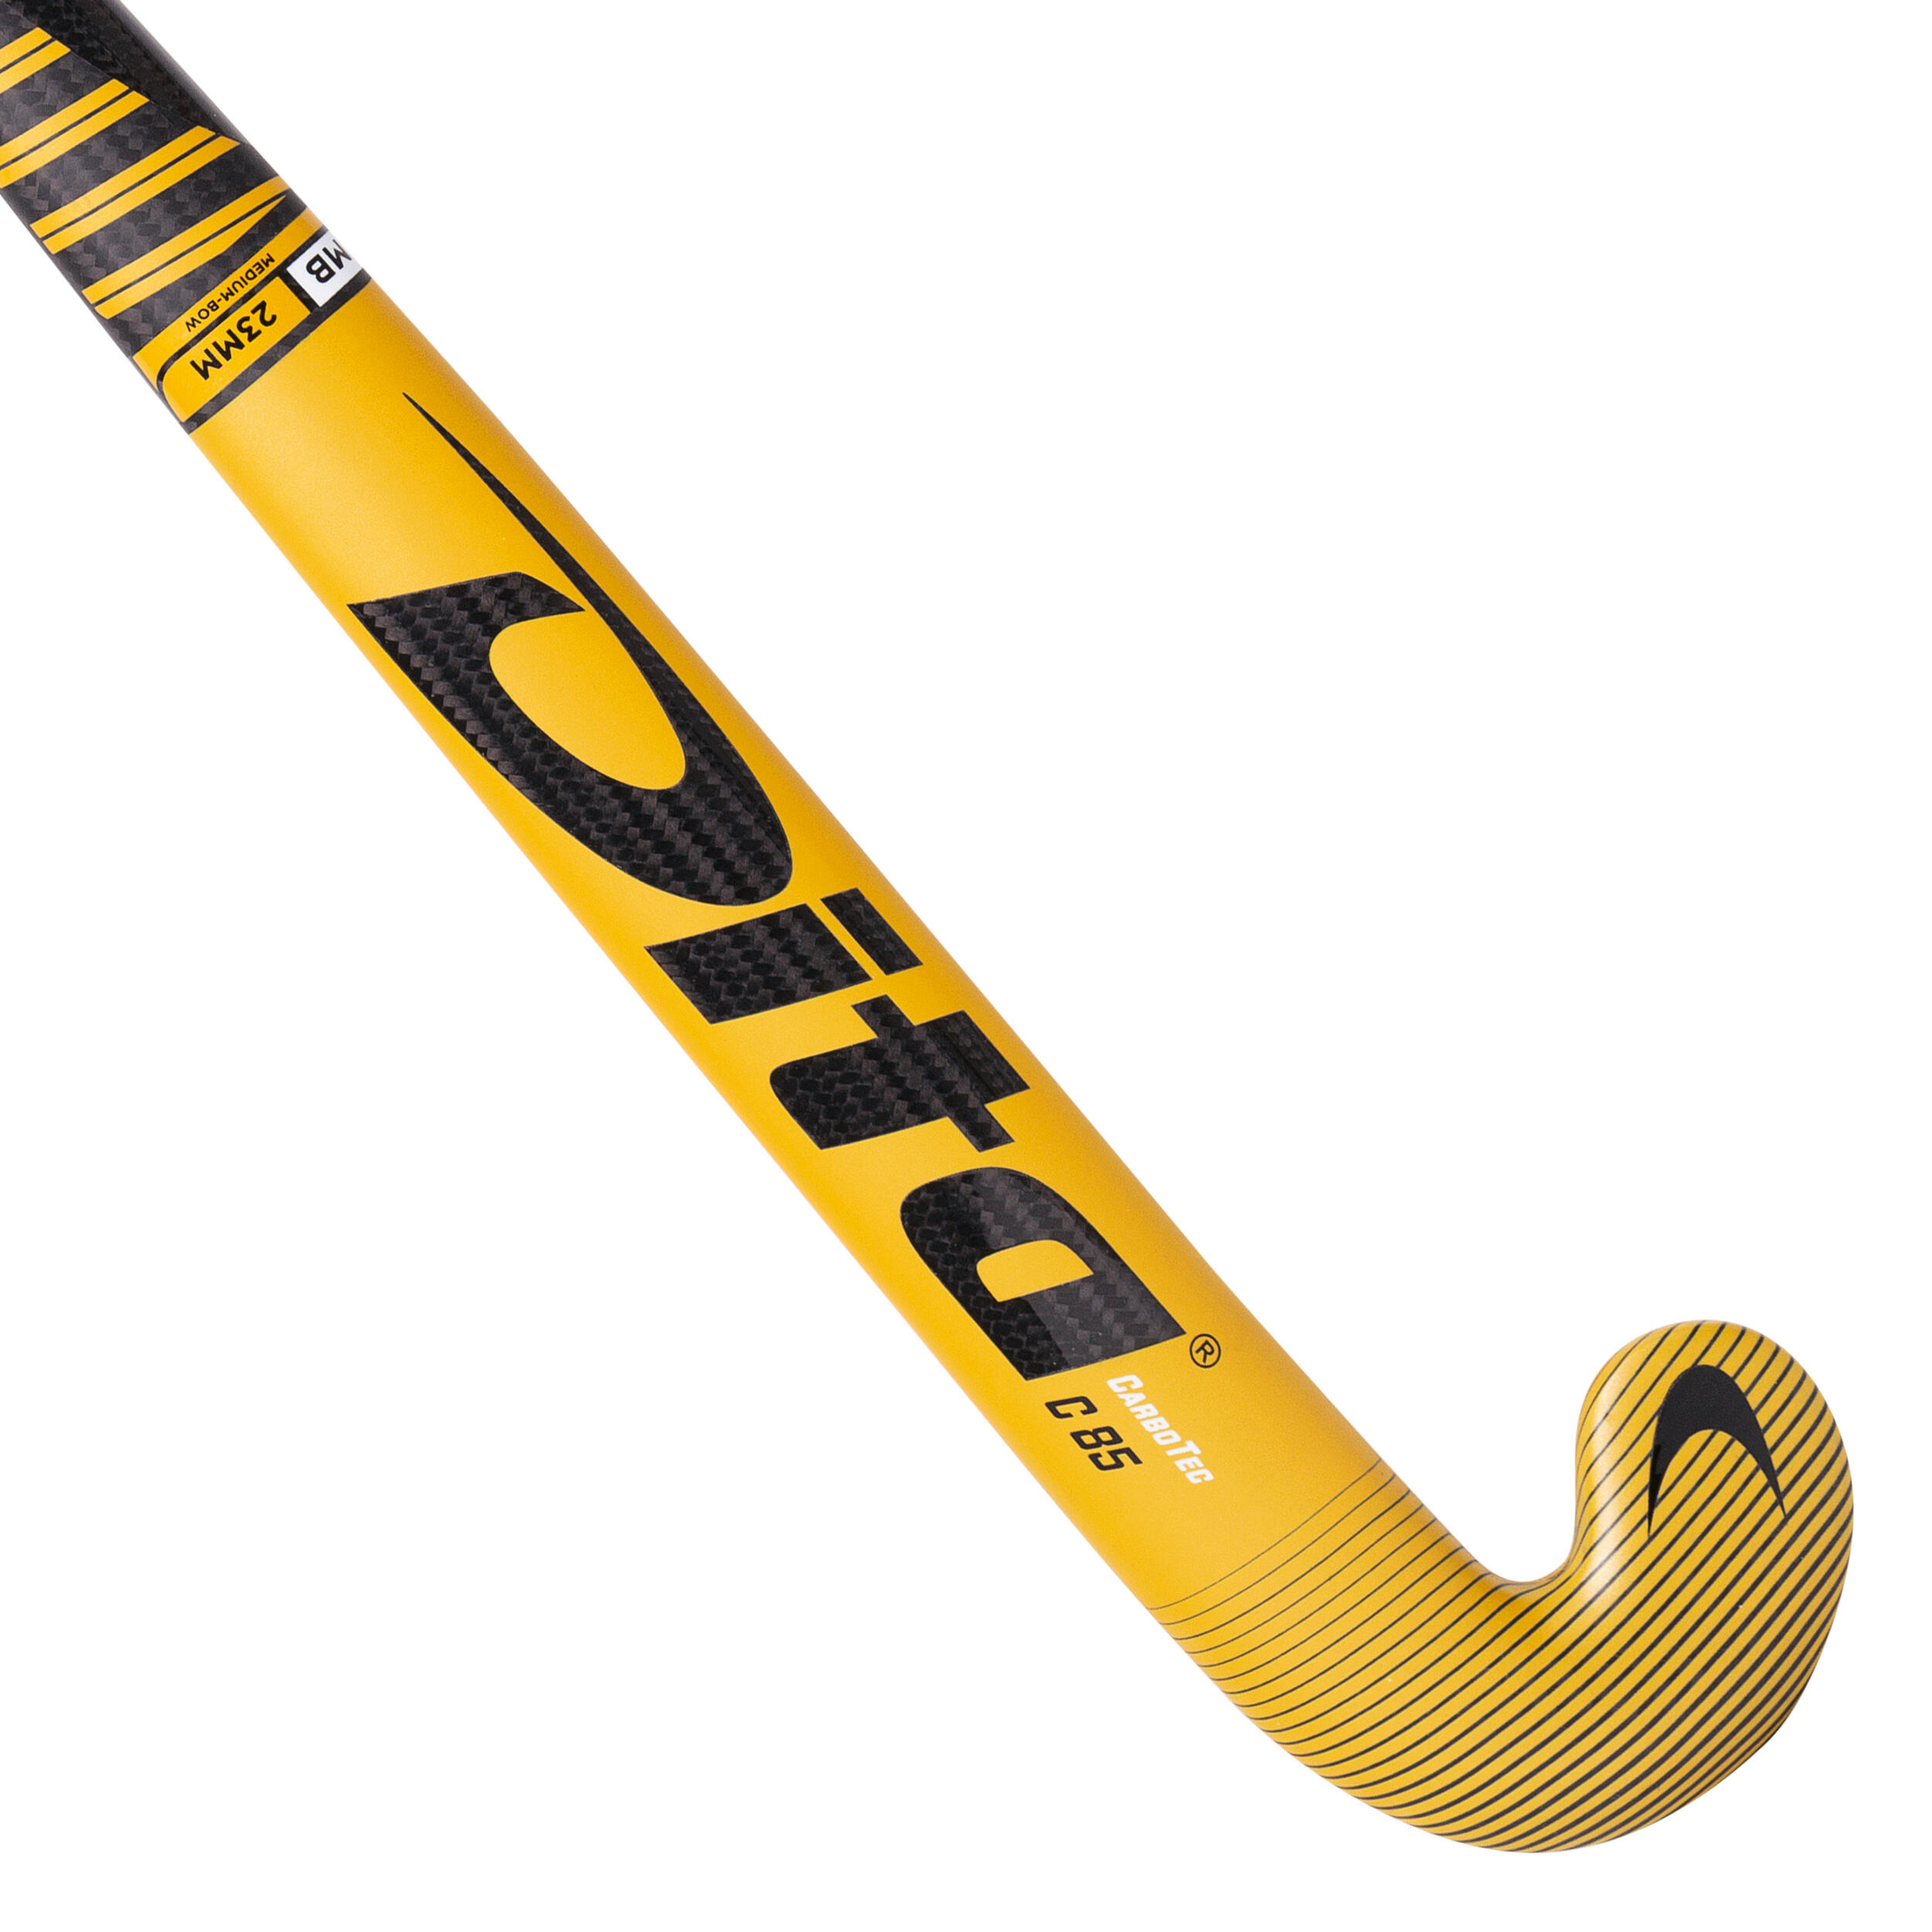 DITA Adult Advanced 85% Carbon Mid Bow Field Hockey Stick CompoTecC85 - Gold/Black